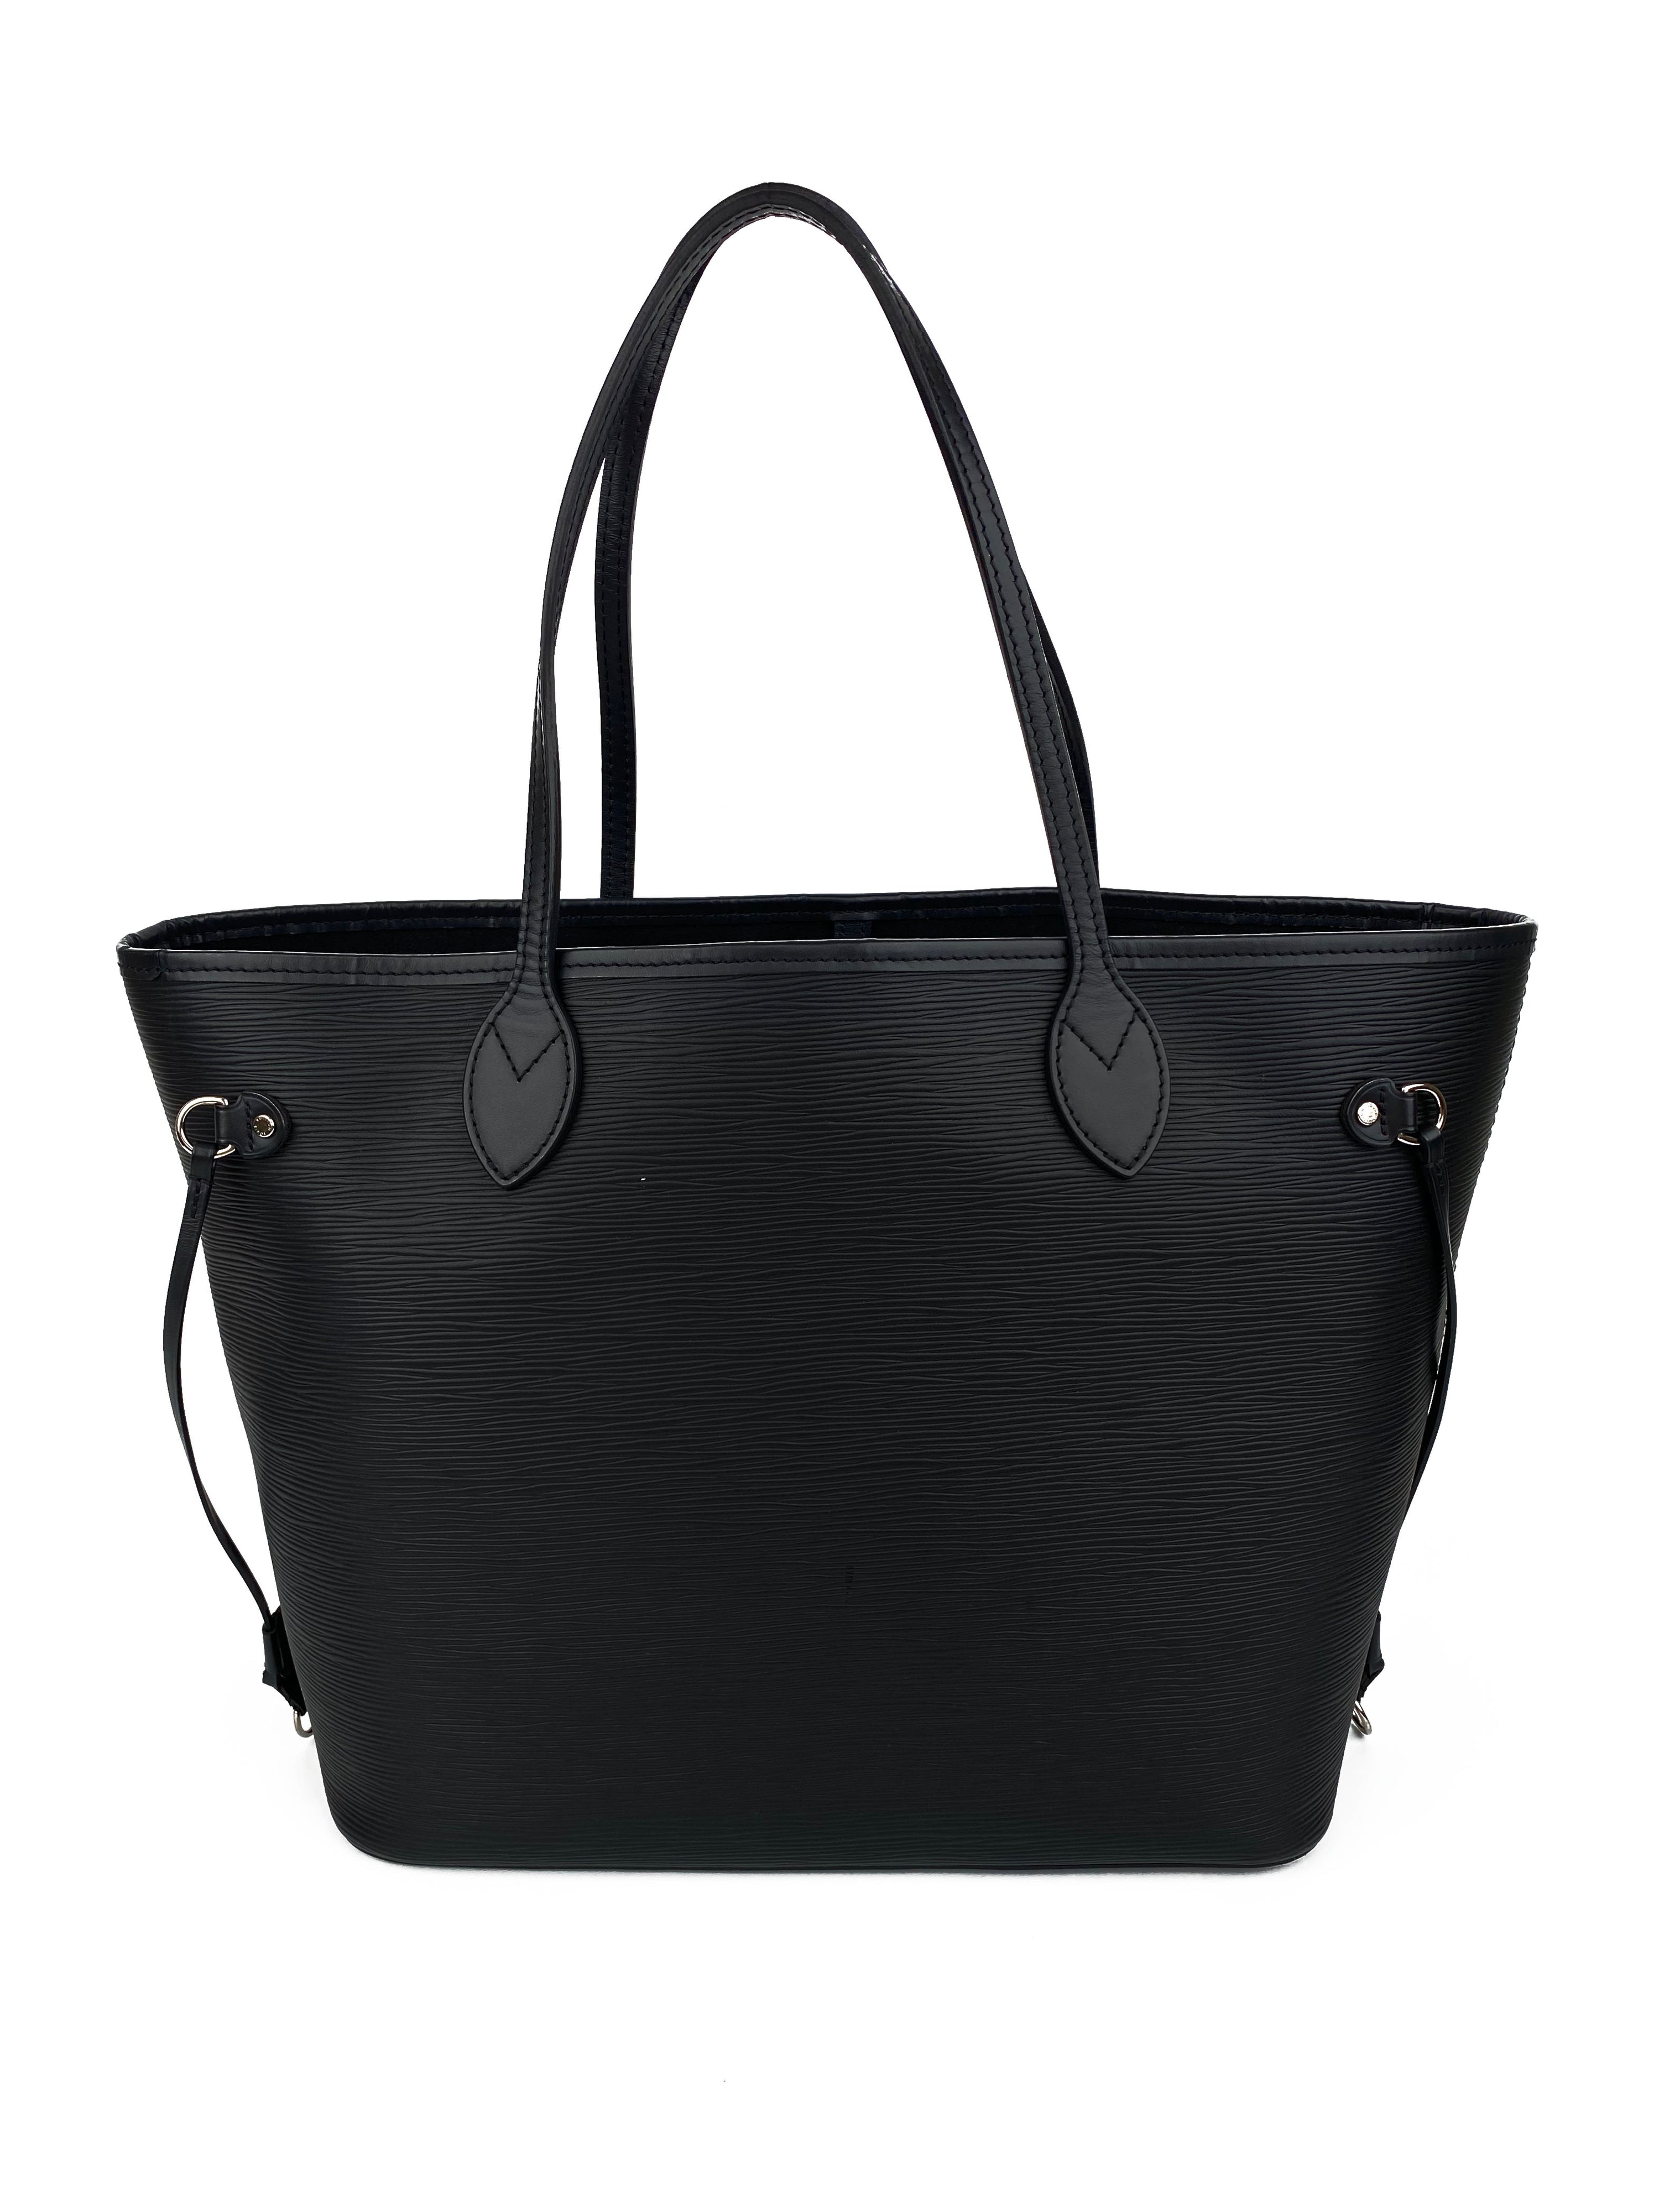 Louis Vuitton Black Epi Neverfull MM Bag